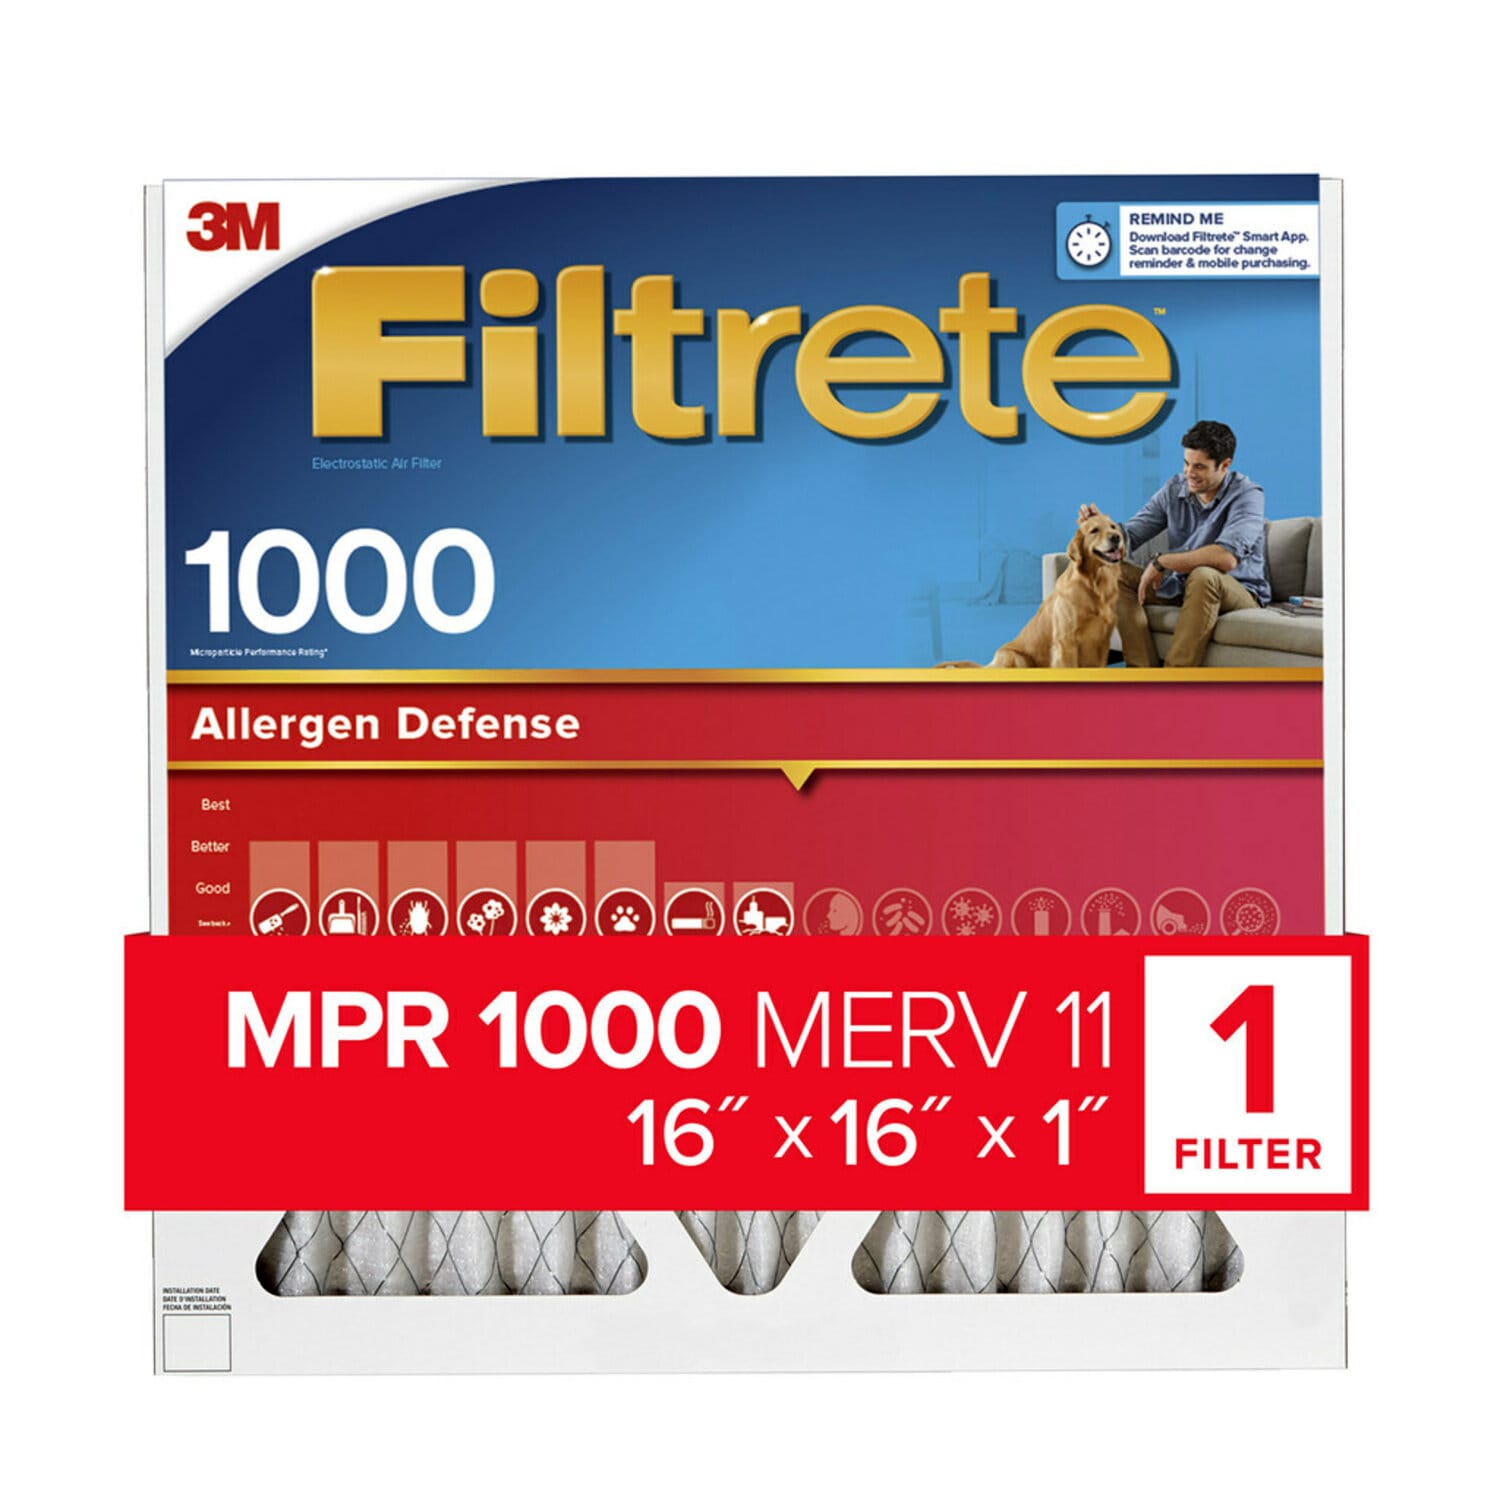 7100192289 - Filtrete Allergen Defense Air Filter, 1000 MPR, AL16-4, 16 in x 16 in x
1 in (40,6 cm x 40,6 cm x 2,5 cm)